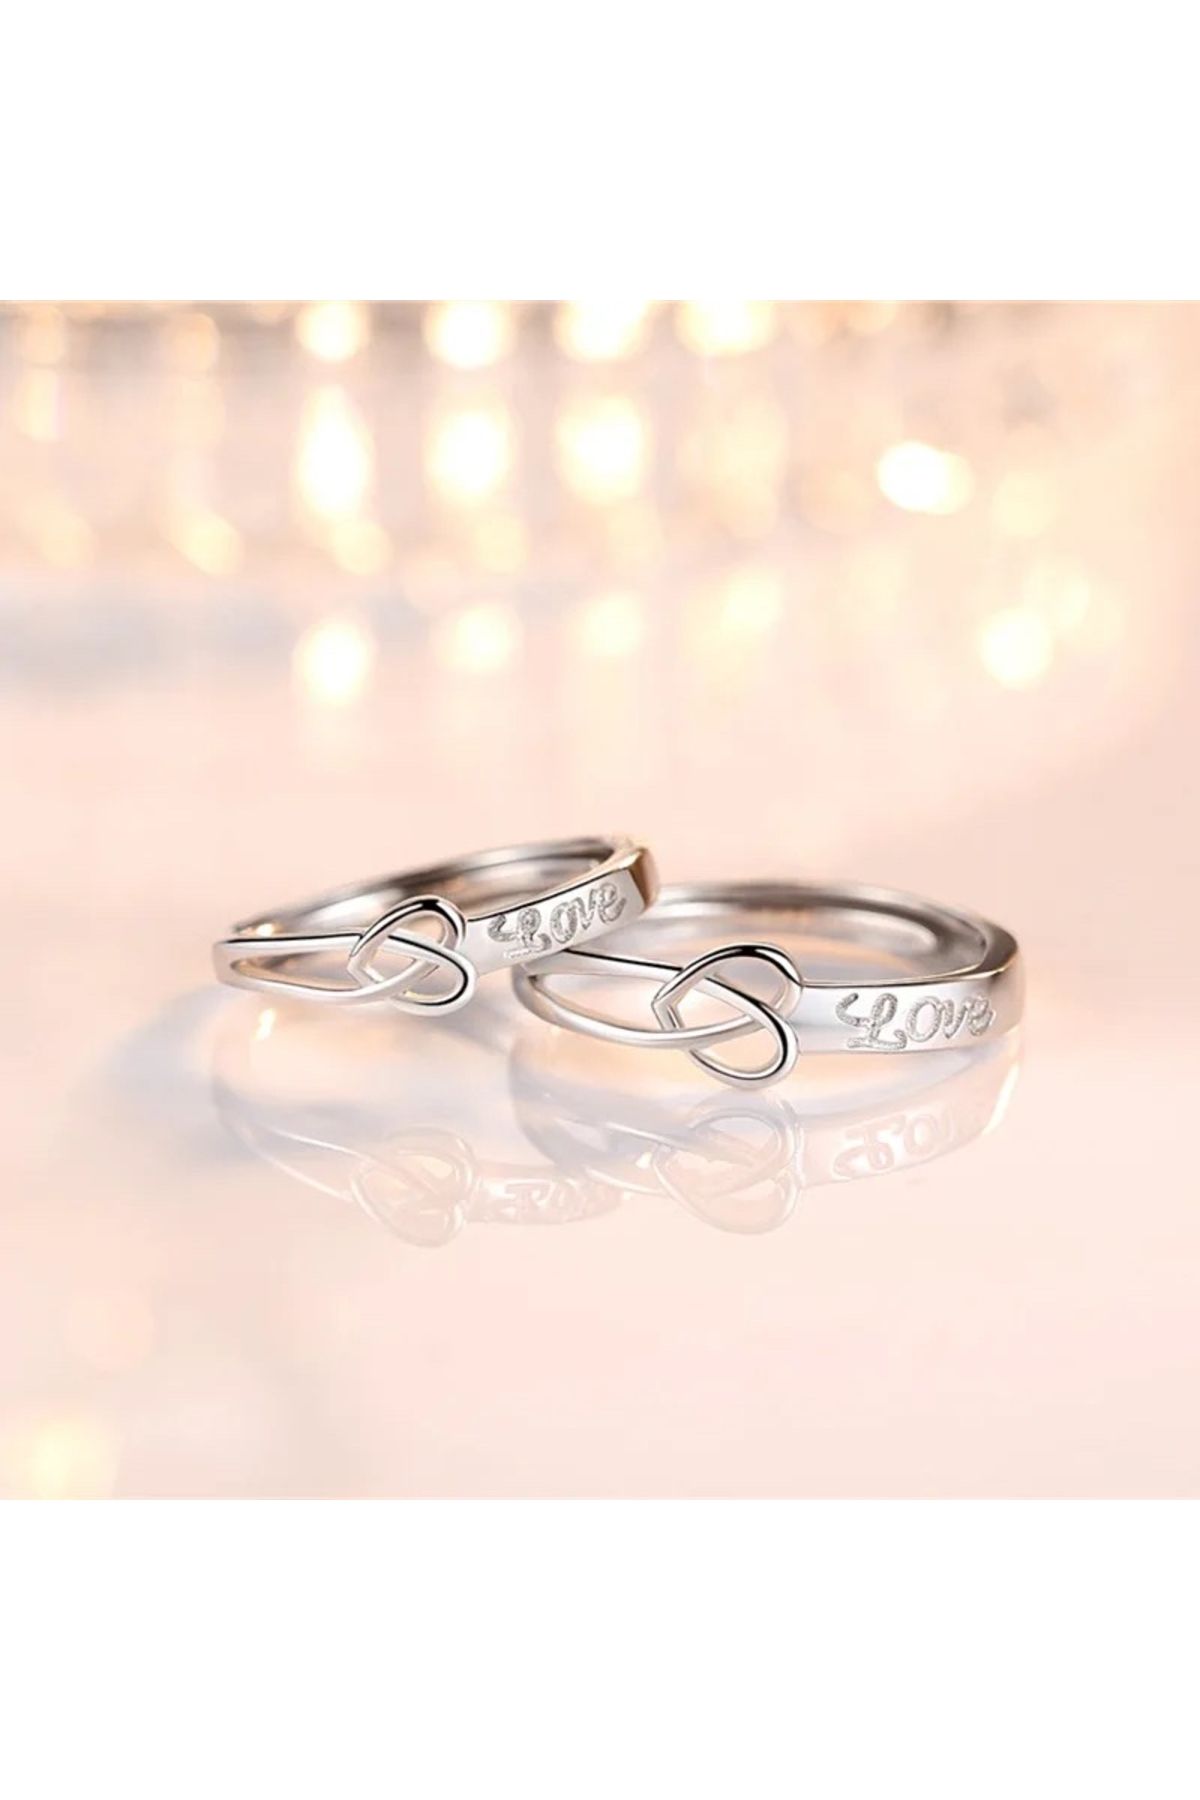 LadyBug Store Fall in love Çift Yüzüğü Bakır Sevgili yüzüğü